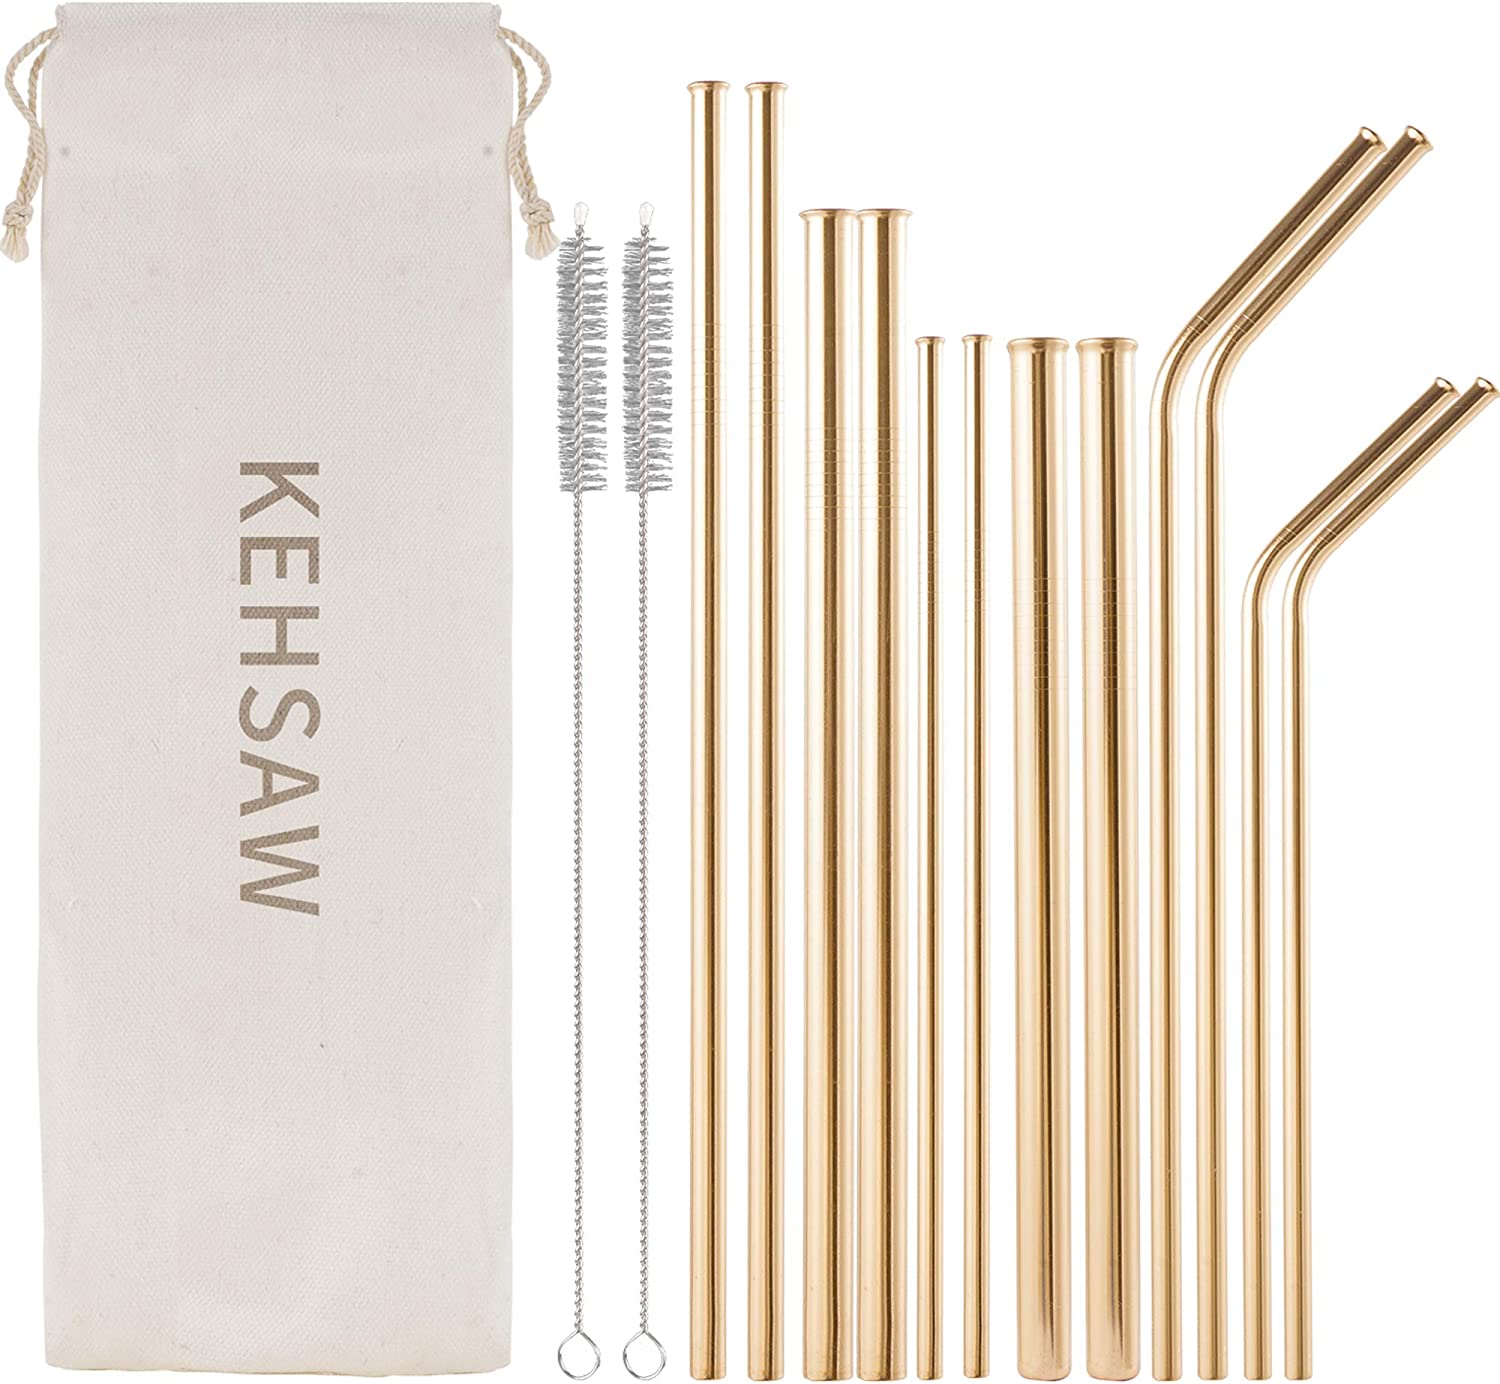 Keshaw Gold Reusable Straws, $12 @amazon.com